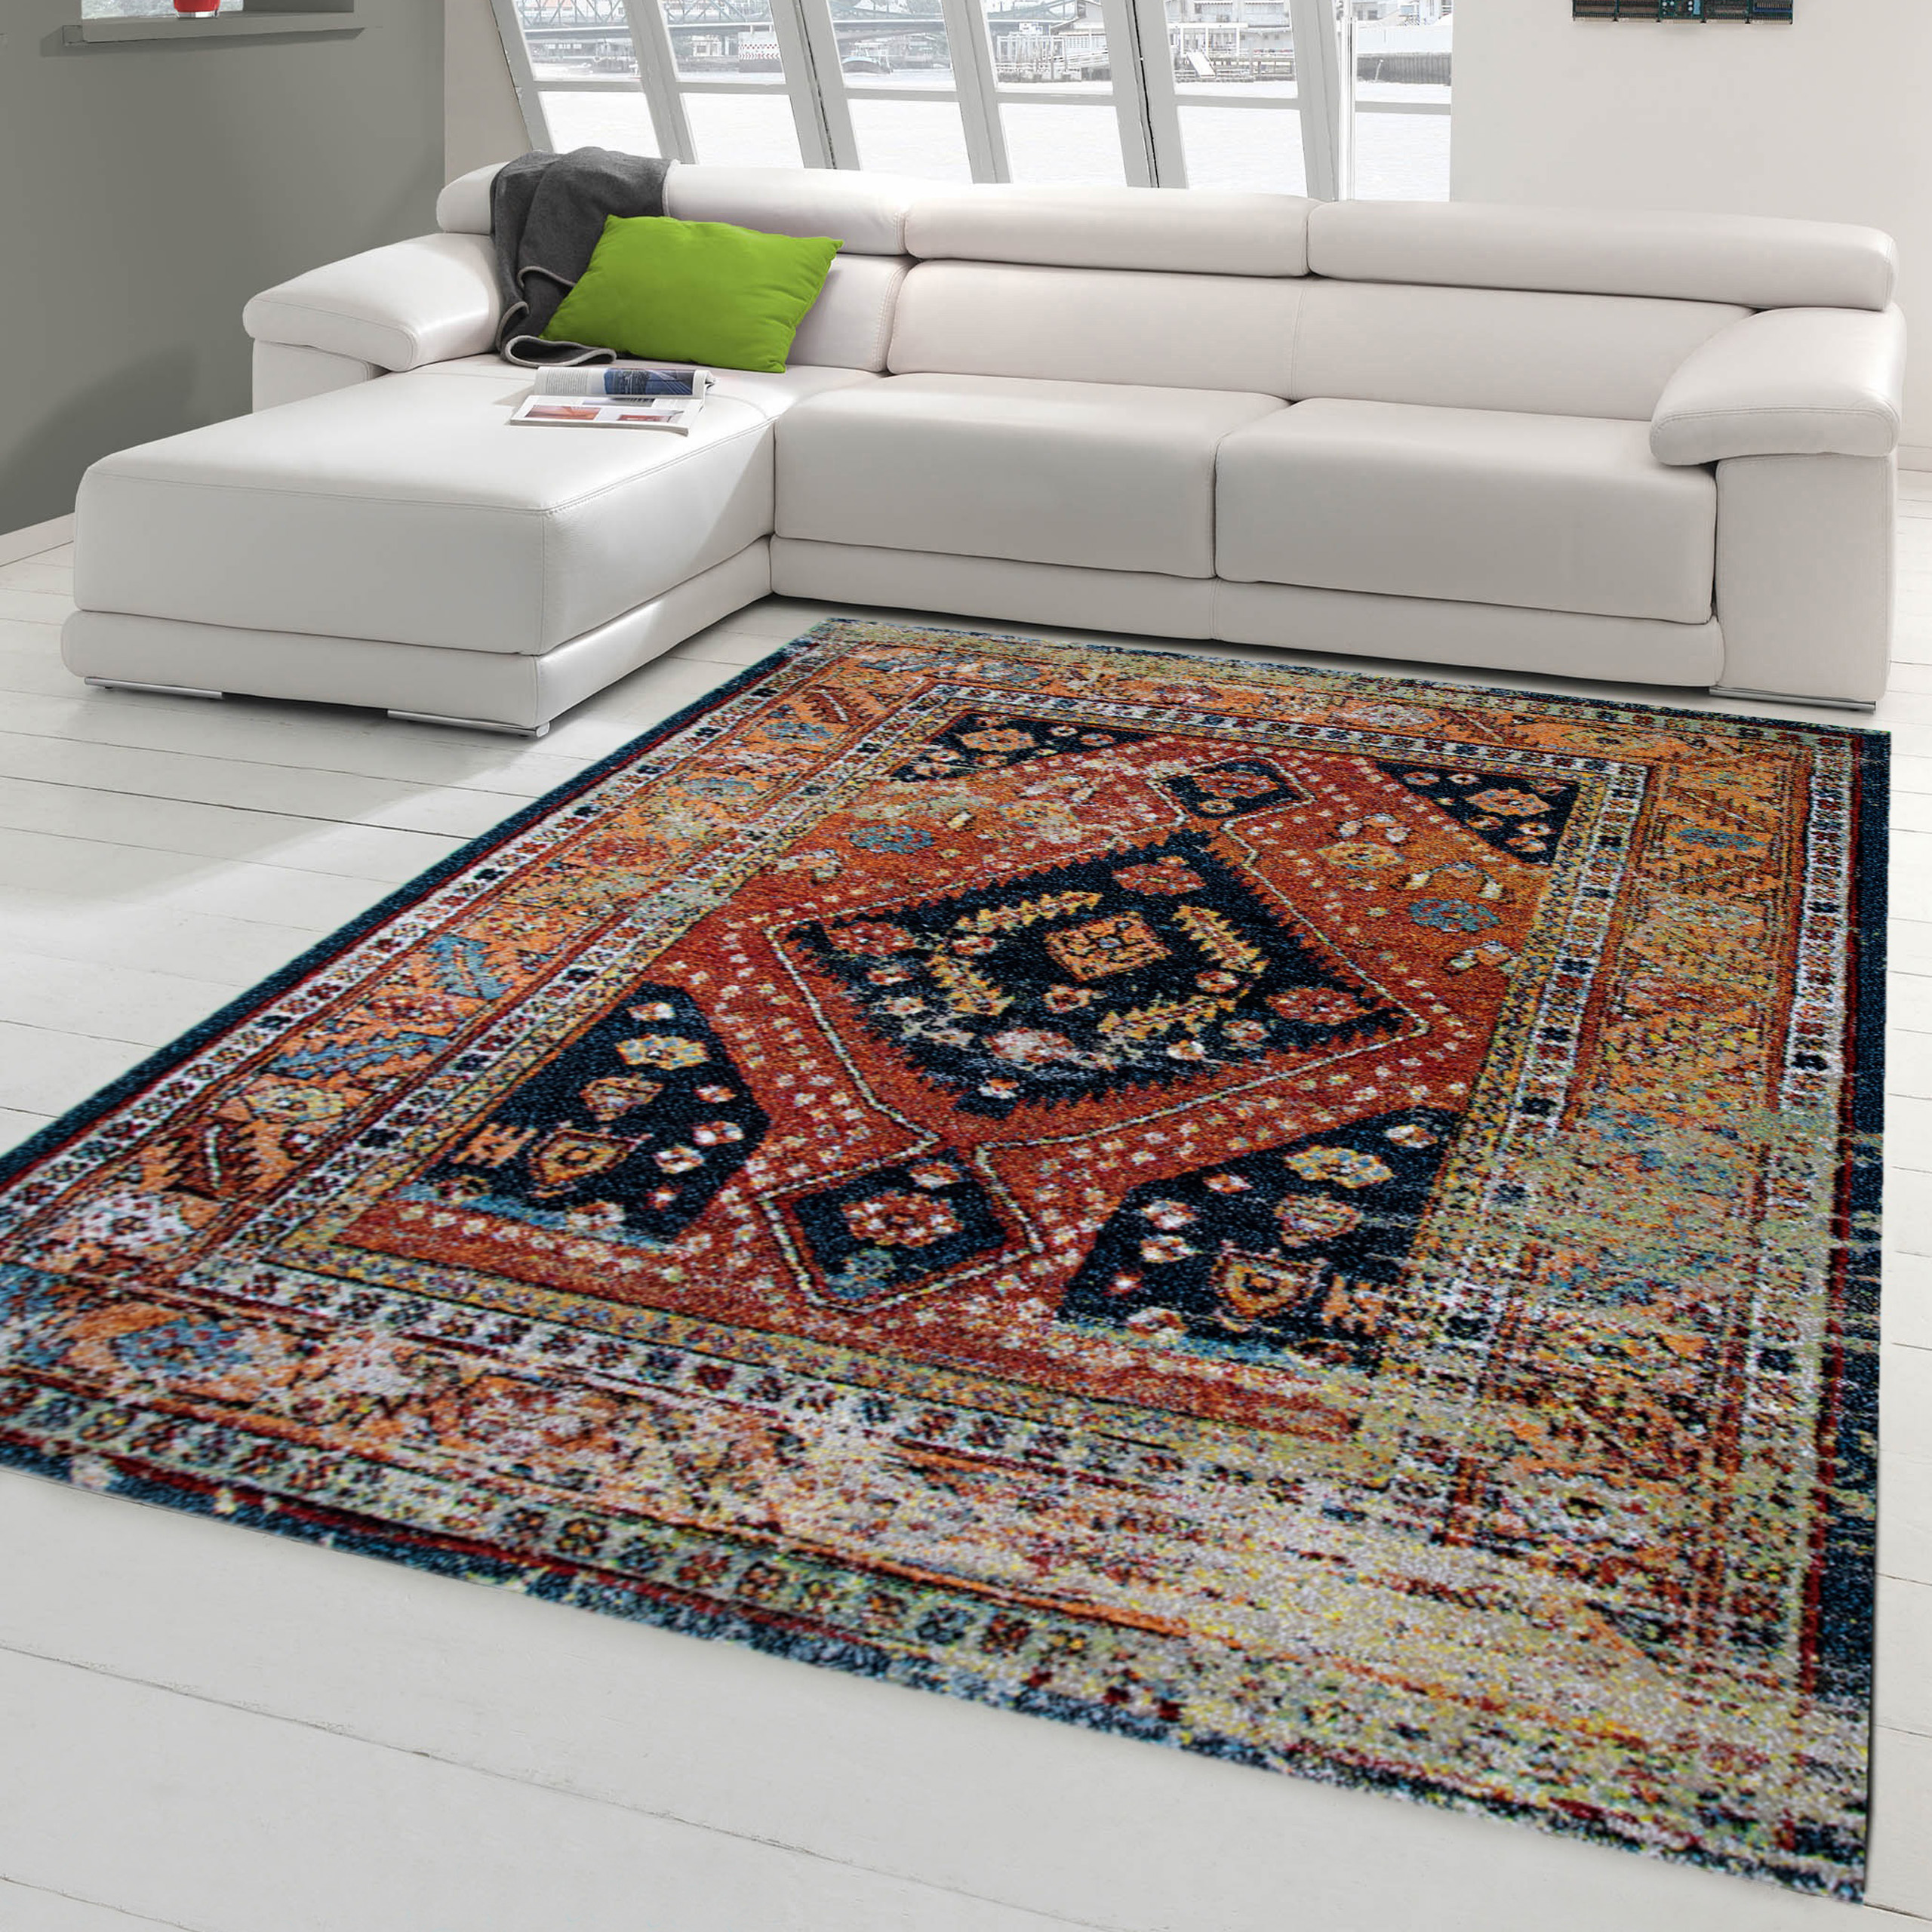 High-quality Teppich -Traum - & designer at dreams cheap Modern and carpet carpets: